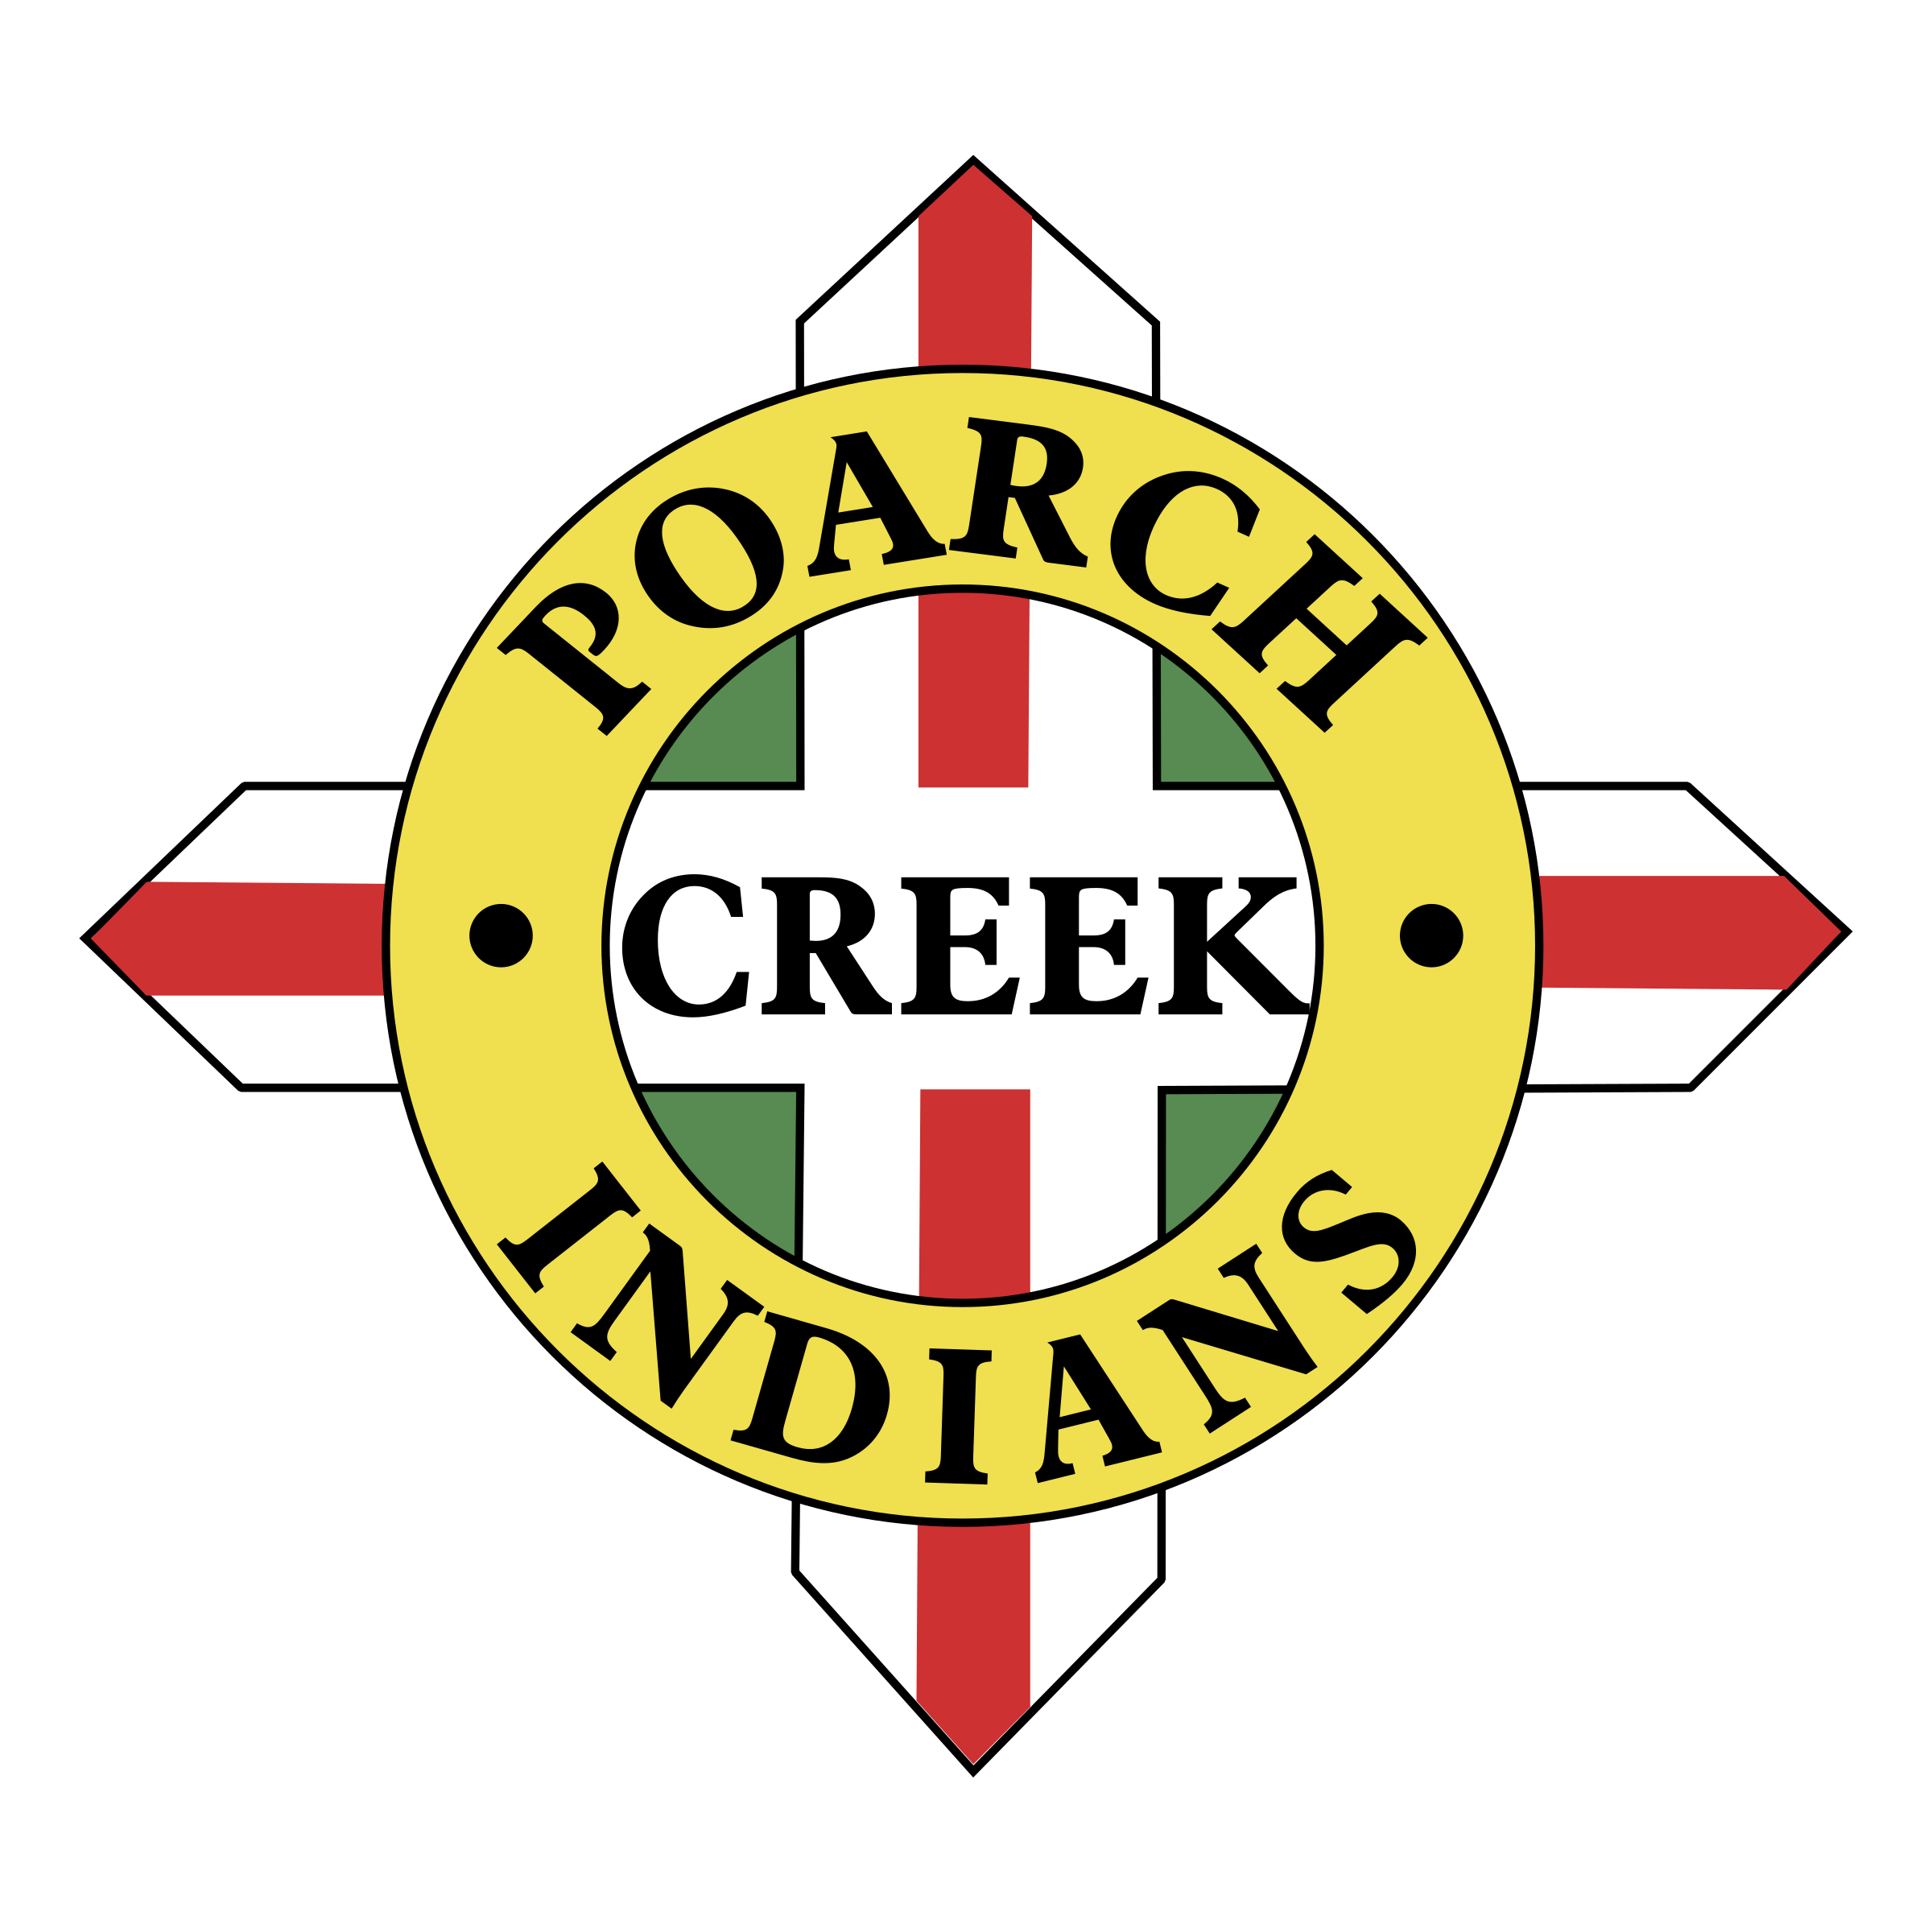 indians clipart indian creek